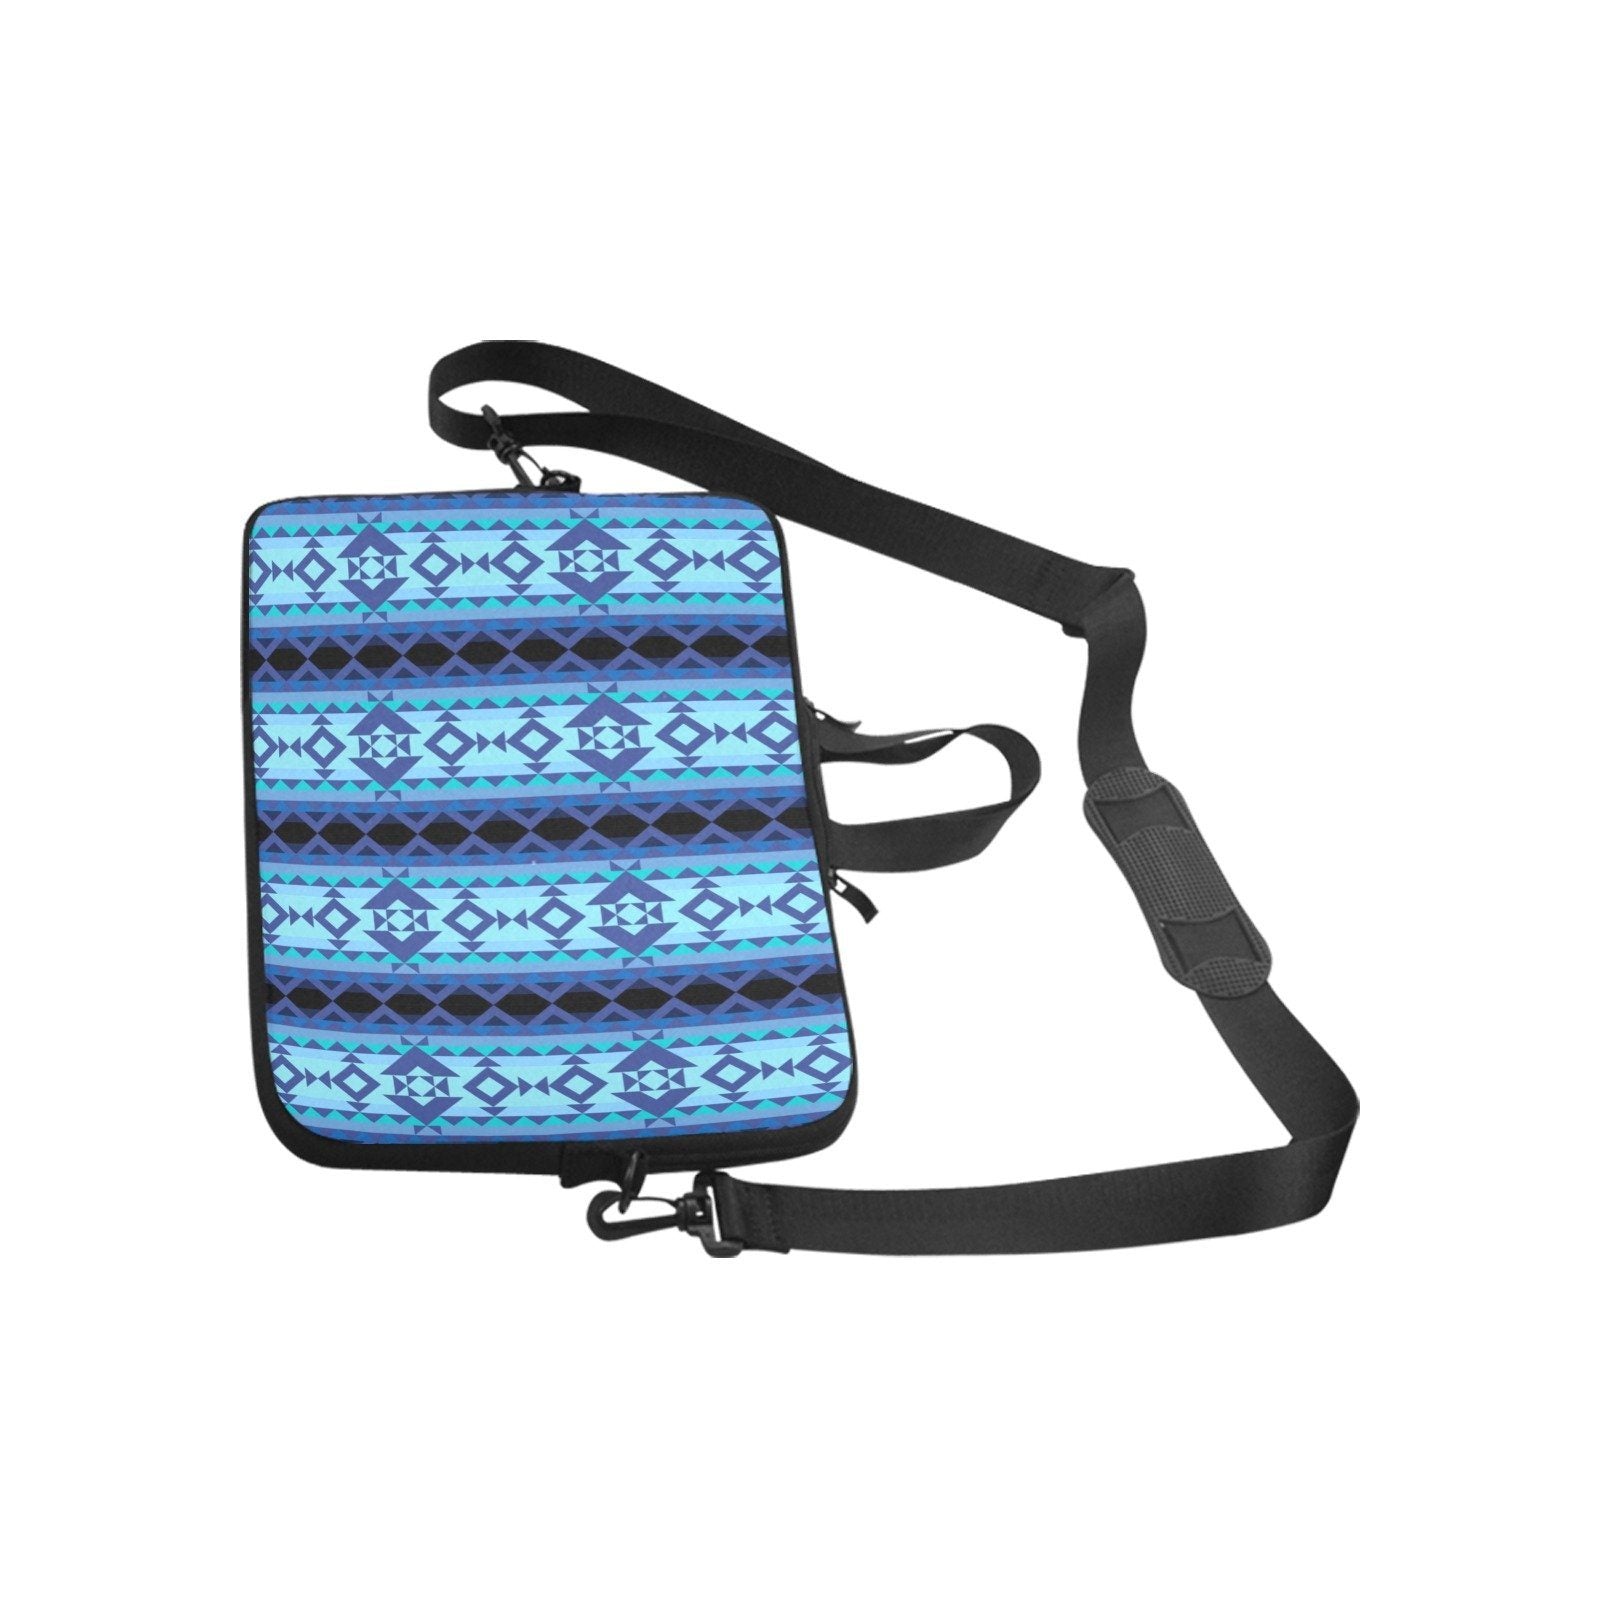 Tipi Laptop Handbags 15" Laptop Handbags 15" e-joyer 